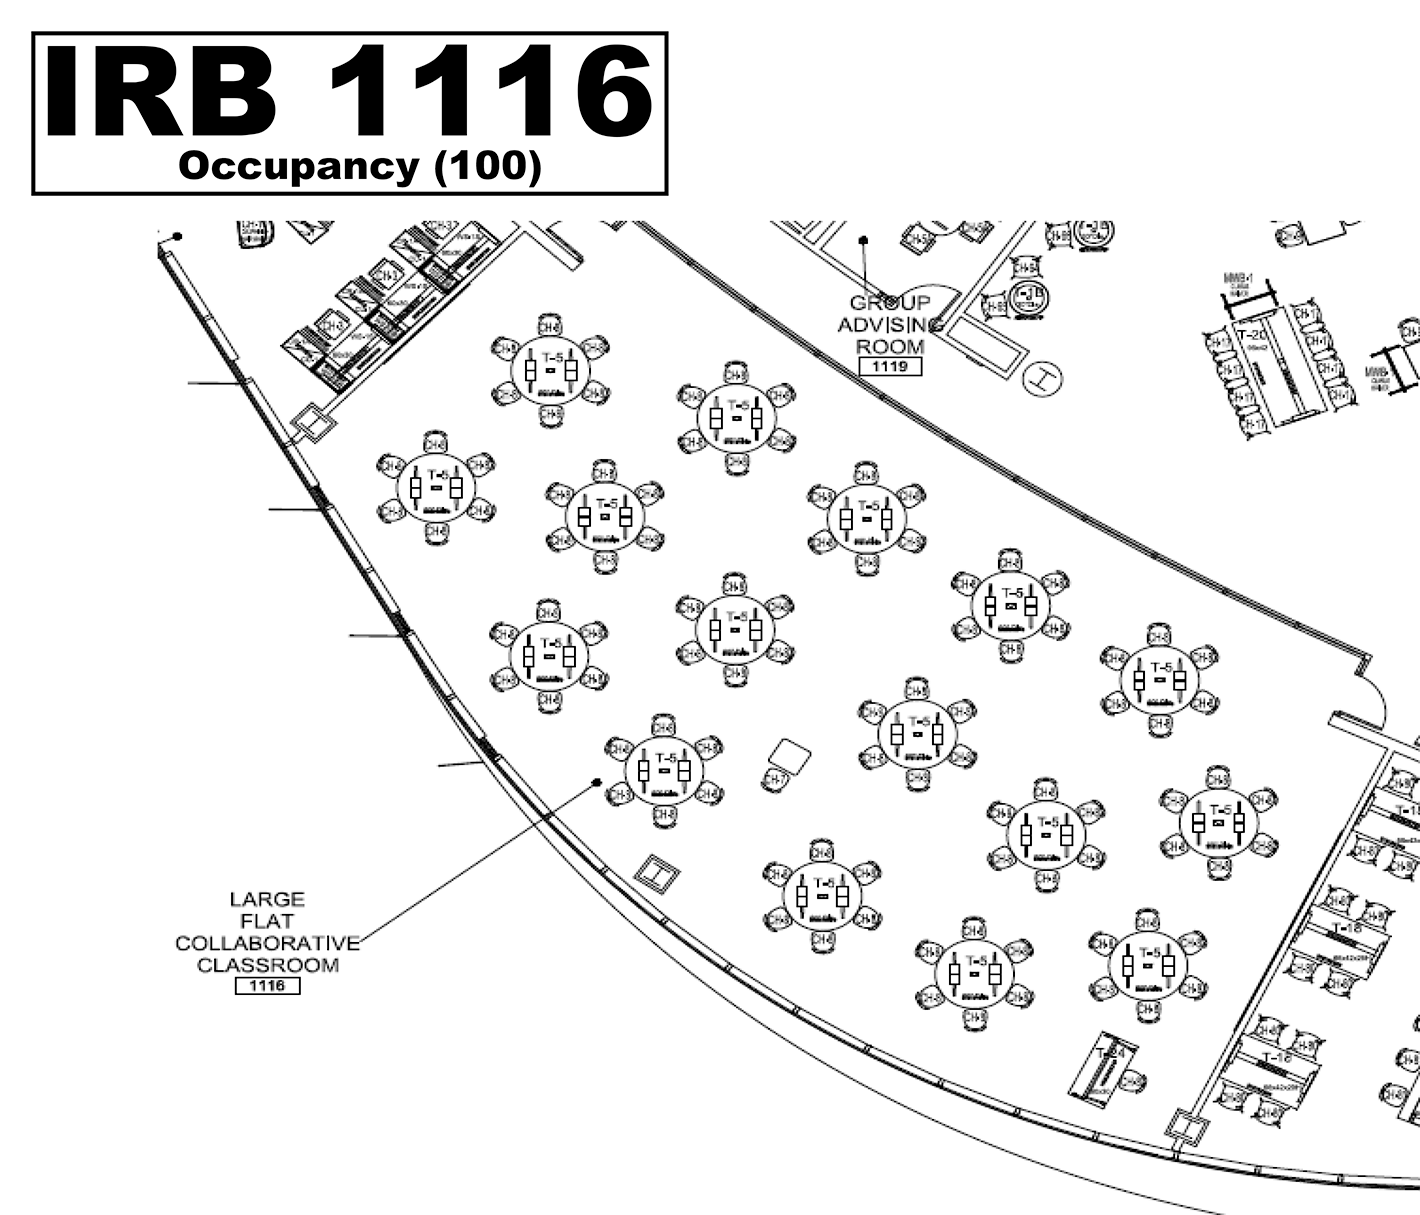 IRB1116 floorplan